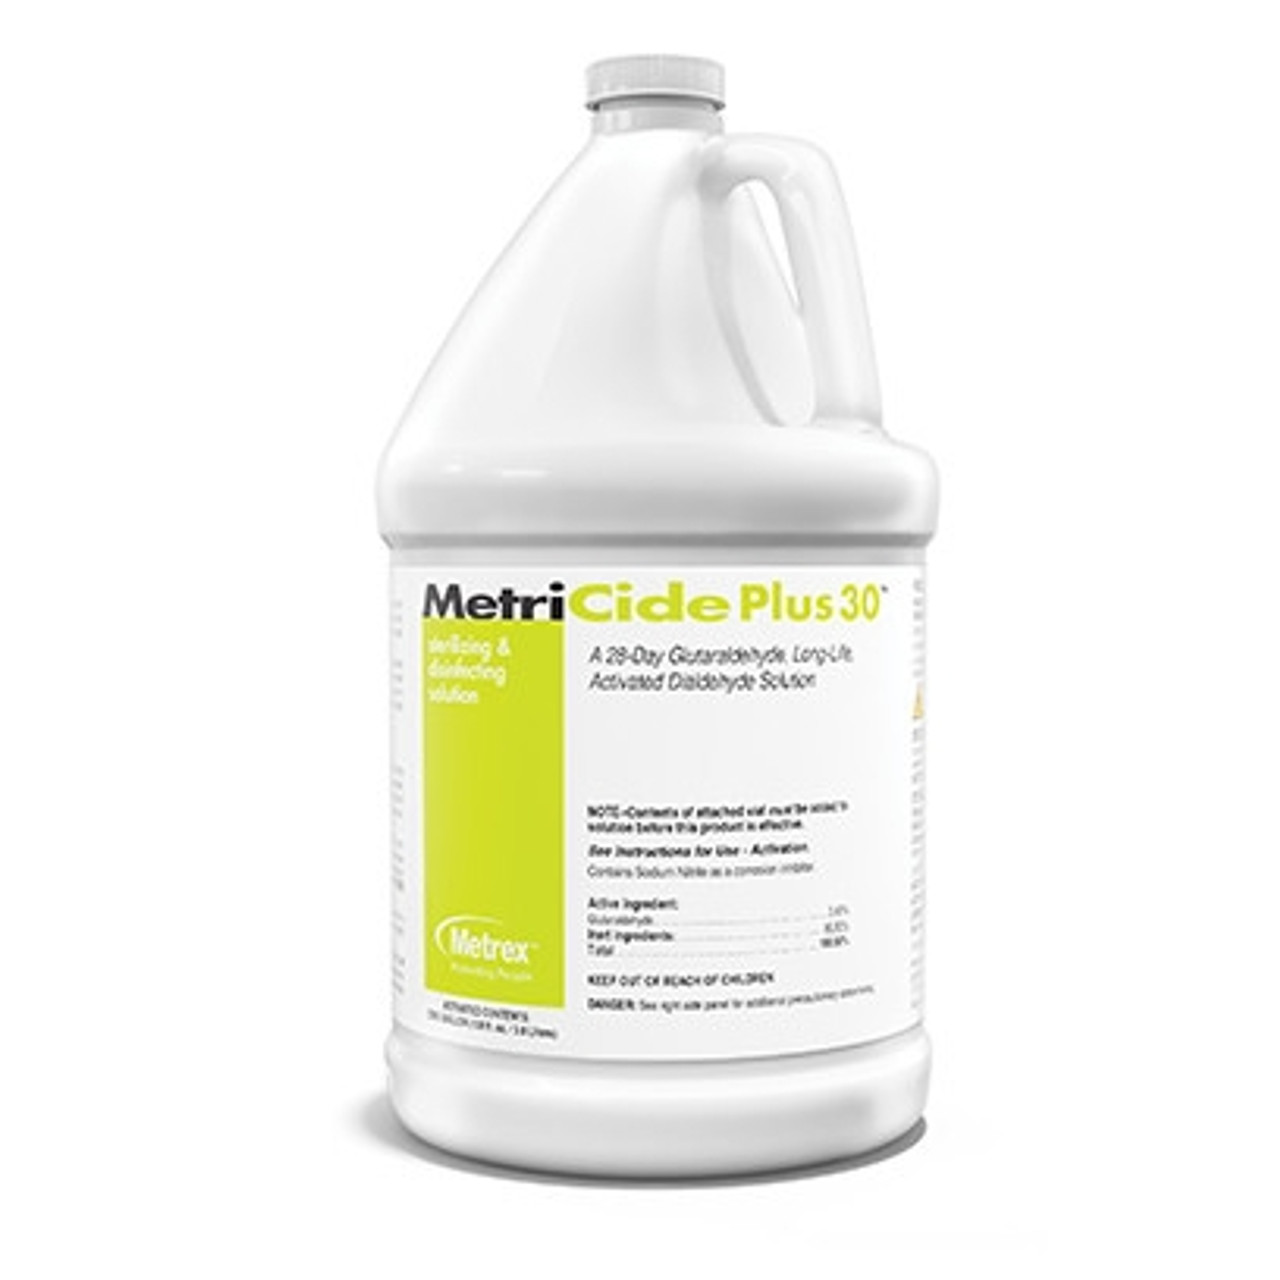 Metrex MetriCide Plus 30 High-Level Disinfectants, 3.4% Glutaraldehyde, Gallon 10-3200